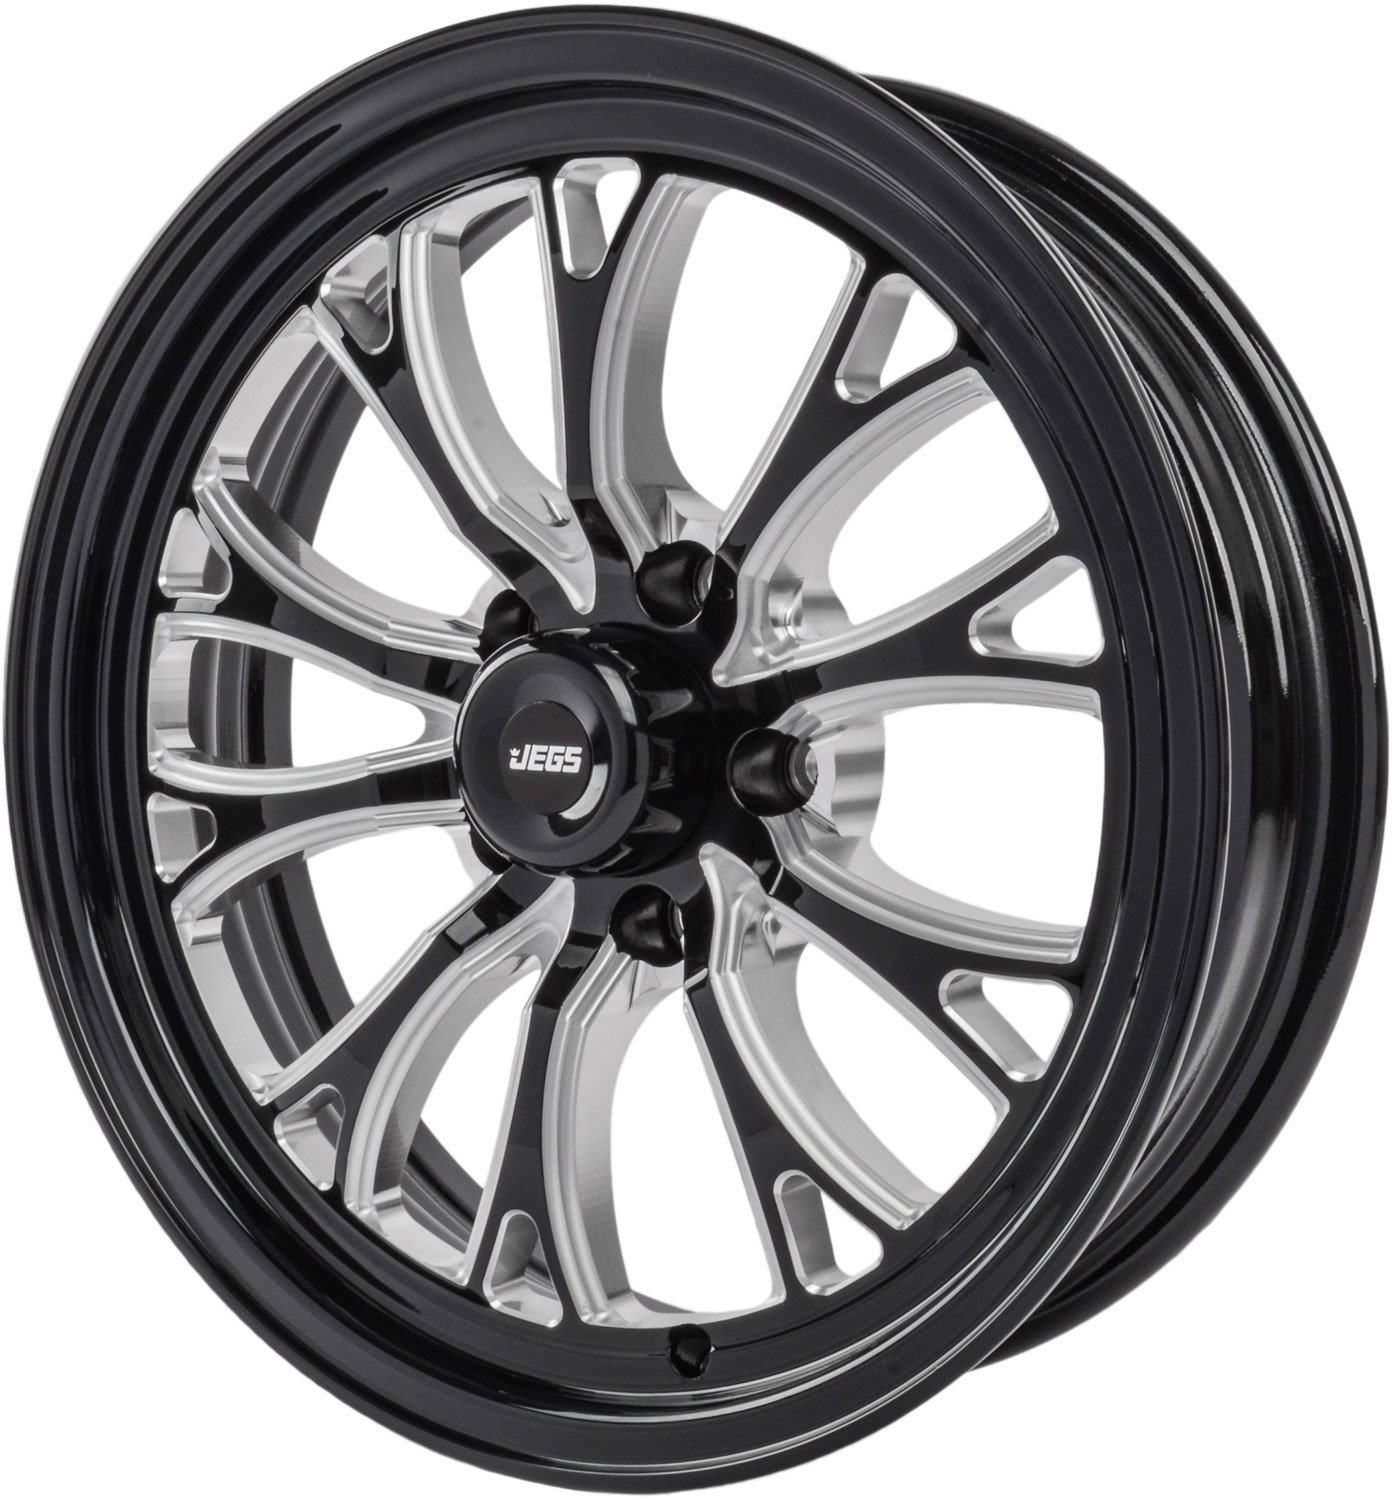 JEGS SSR Spike Wheel 17x4.5 | Shop for JEGS Spike Wheels 17x4.5 Inch Online  - JEGS High Performance